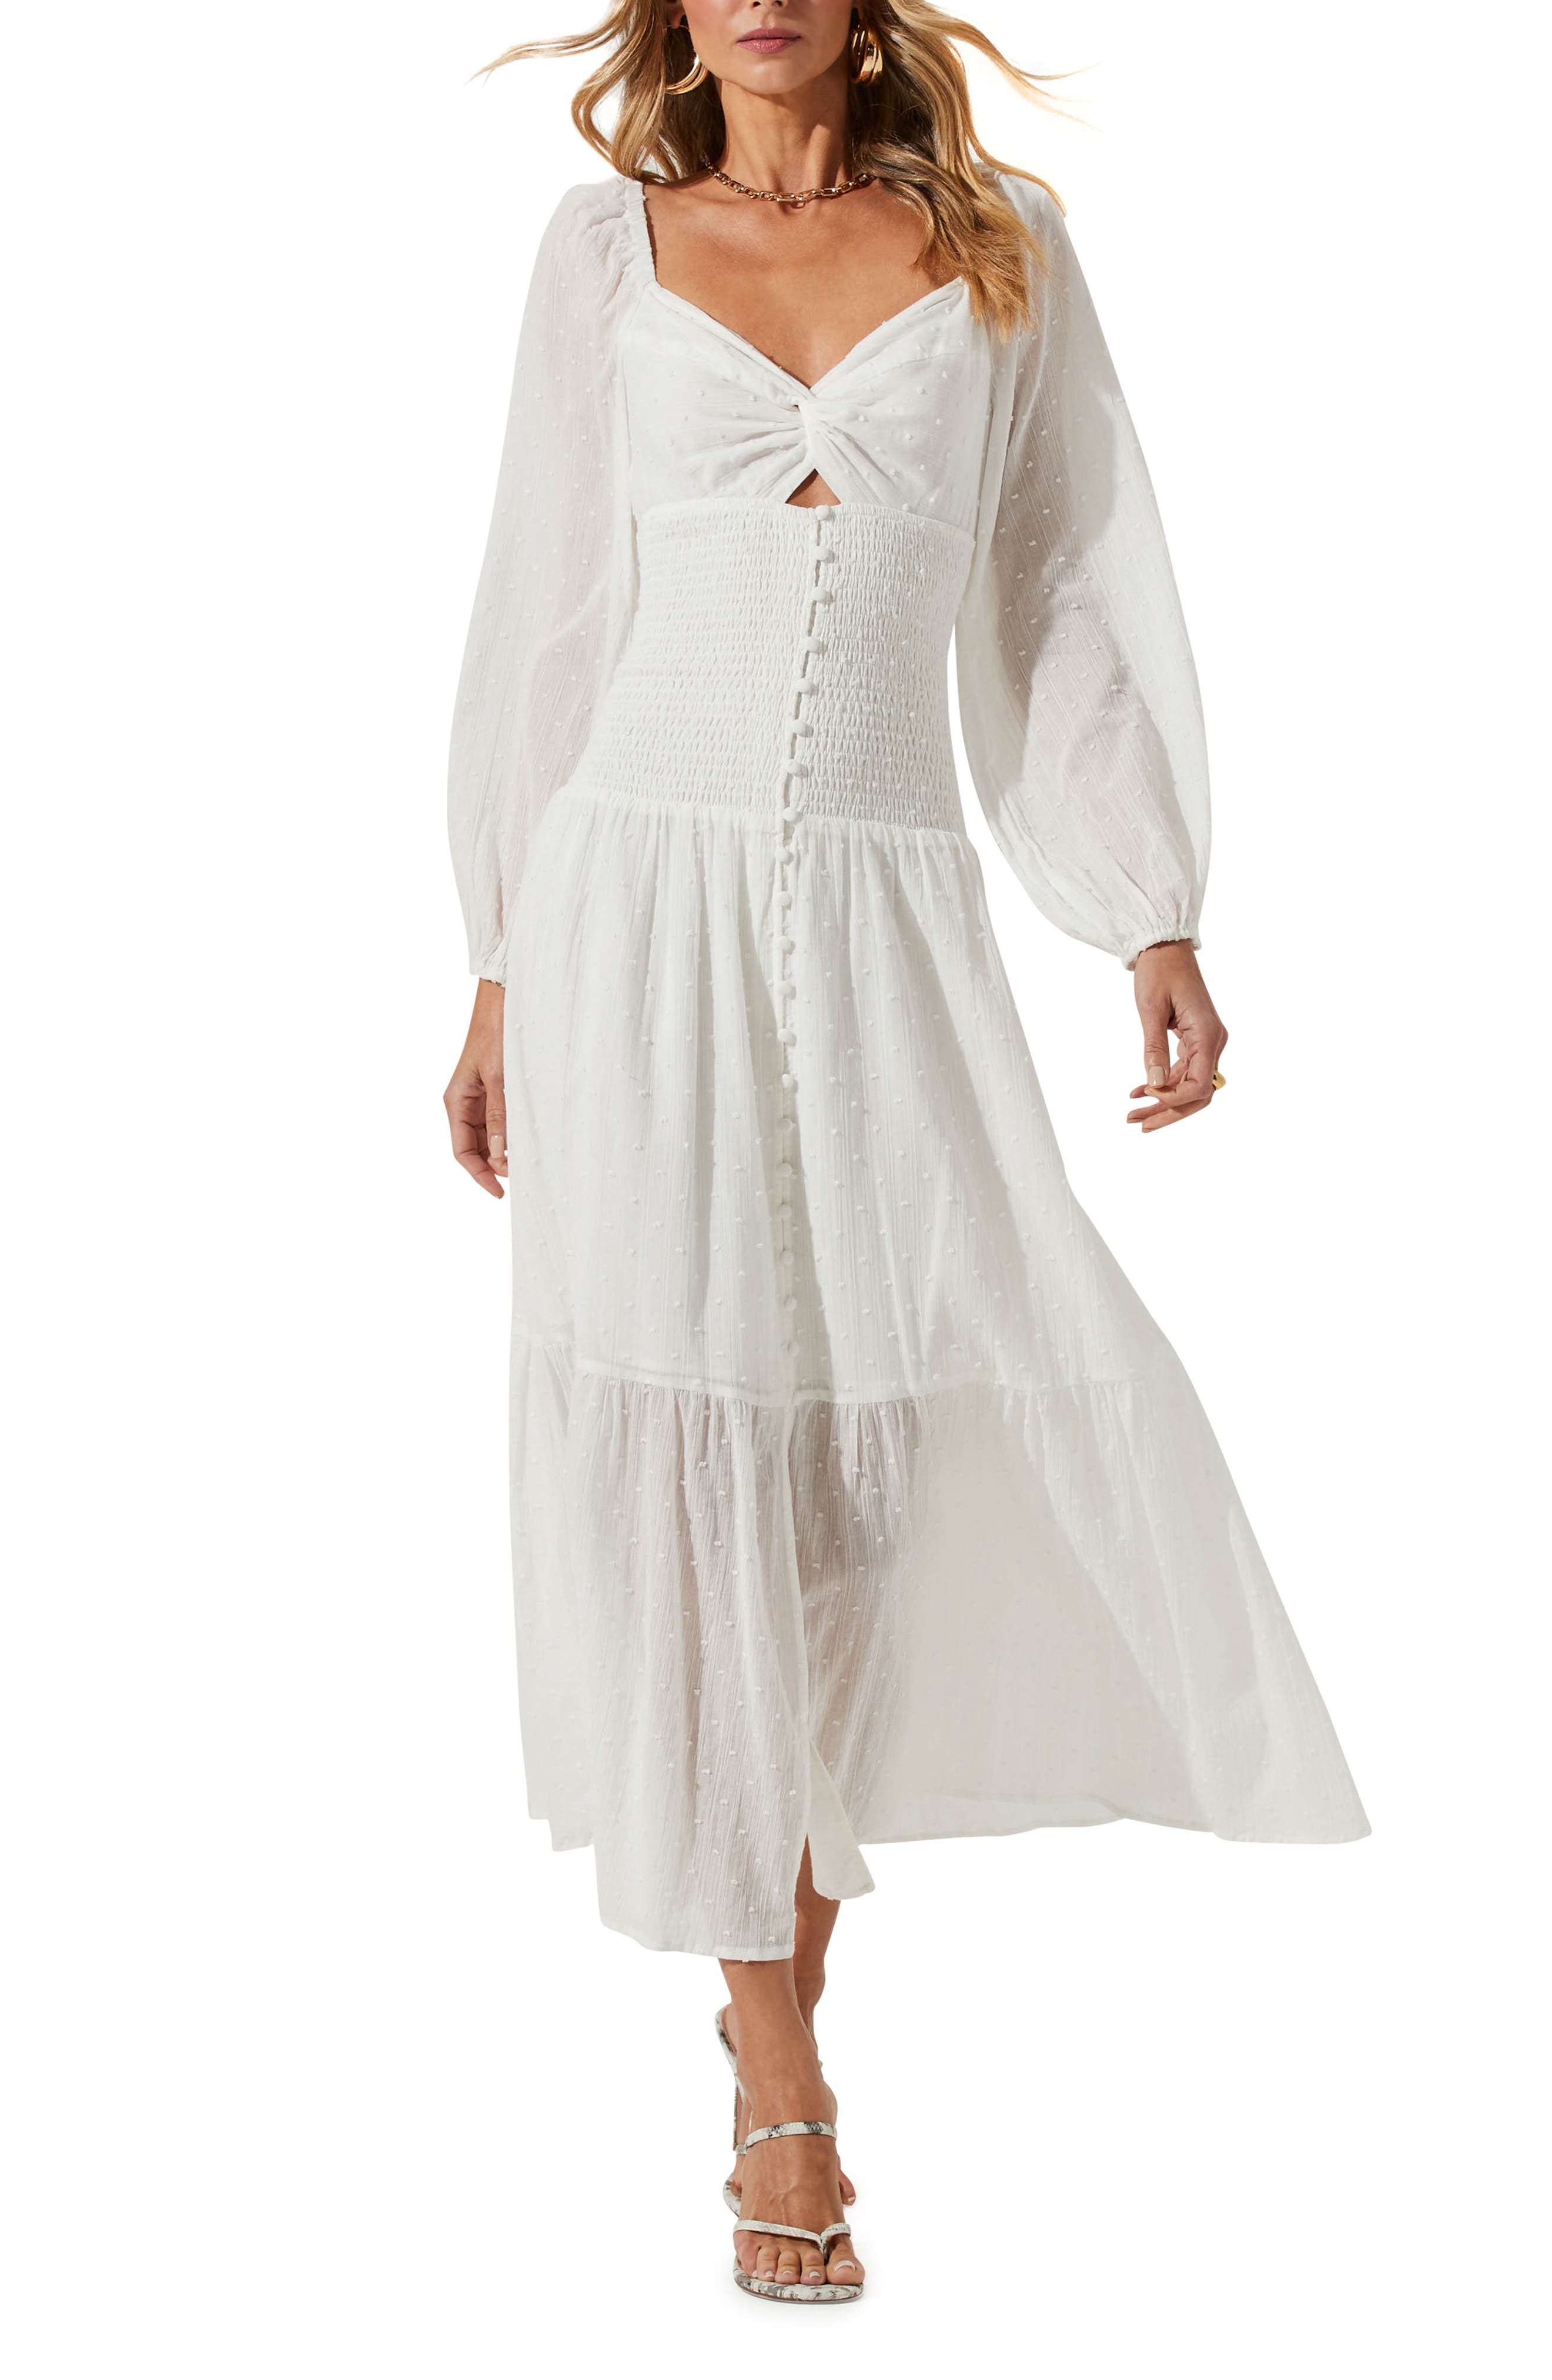 Women's White Vacation Dress Ideas ...